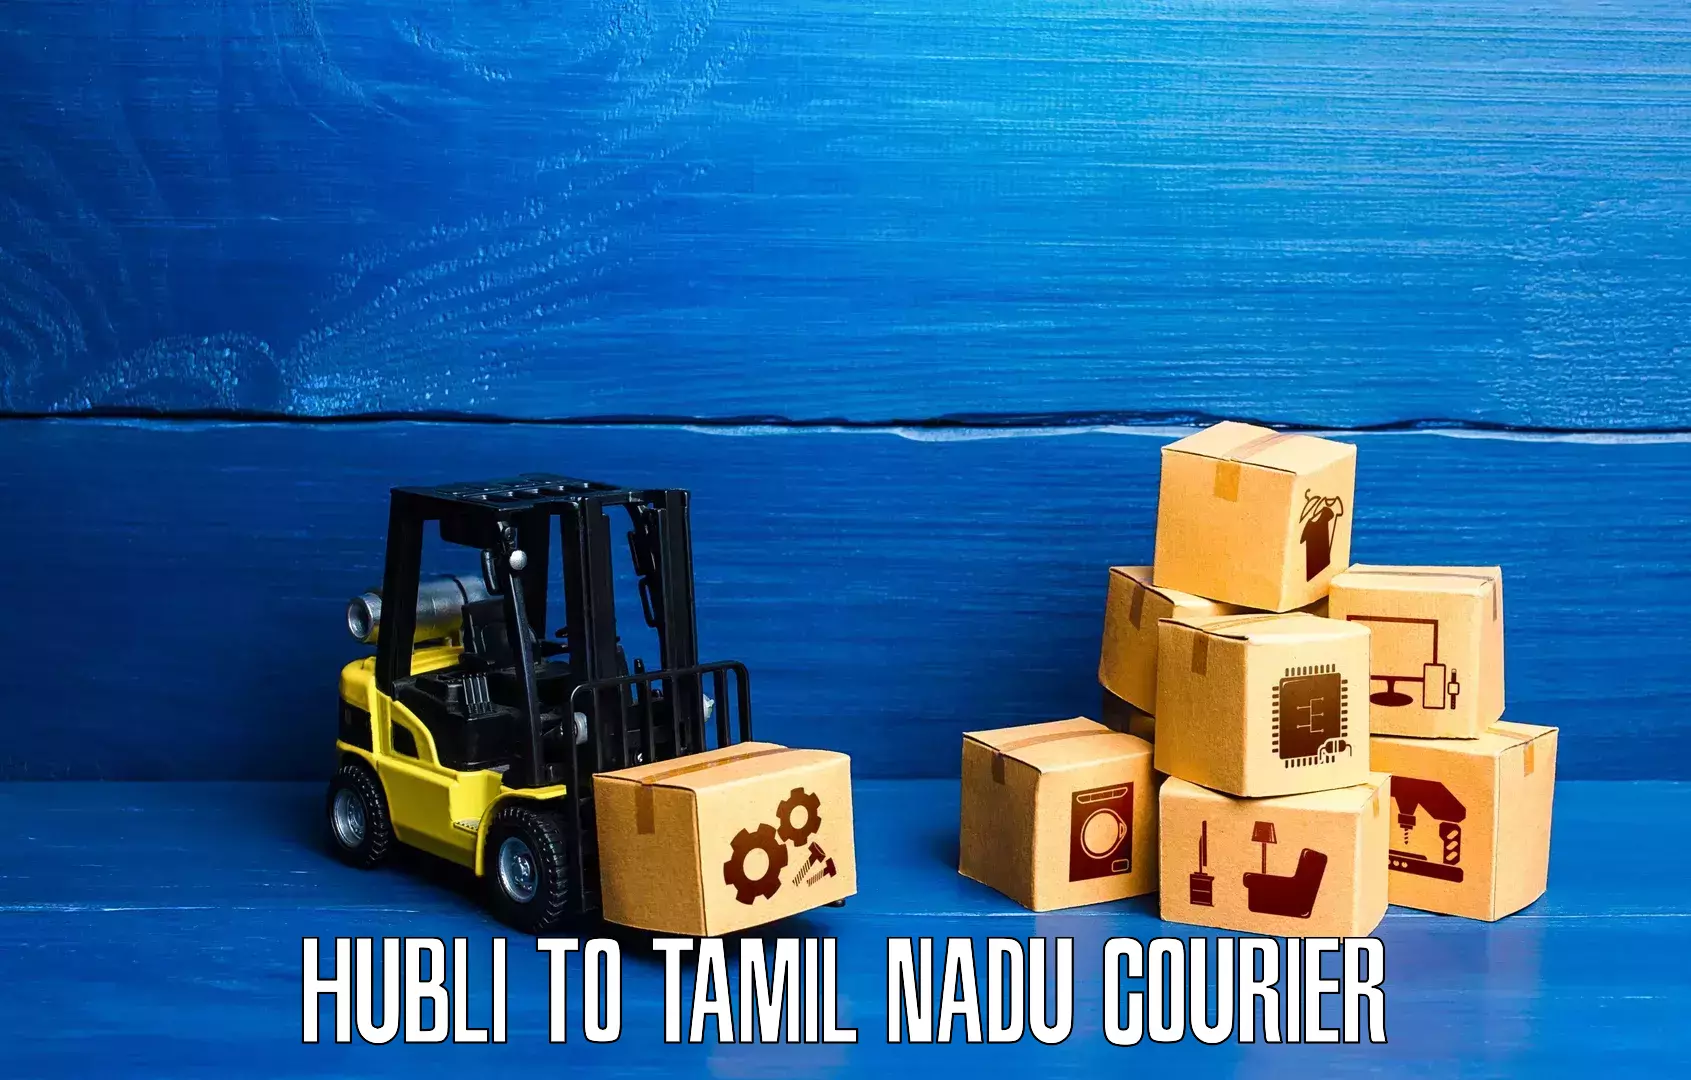 High-speed parcel service Hubli to Tamil Nadu